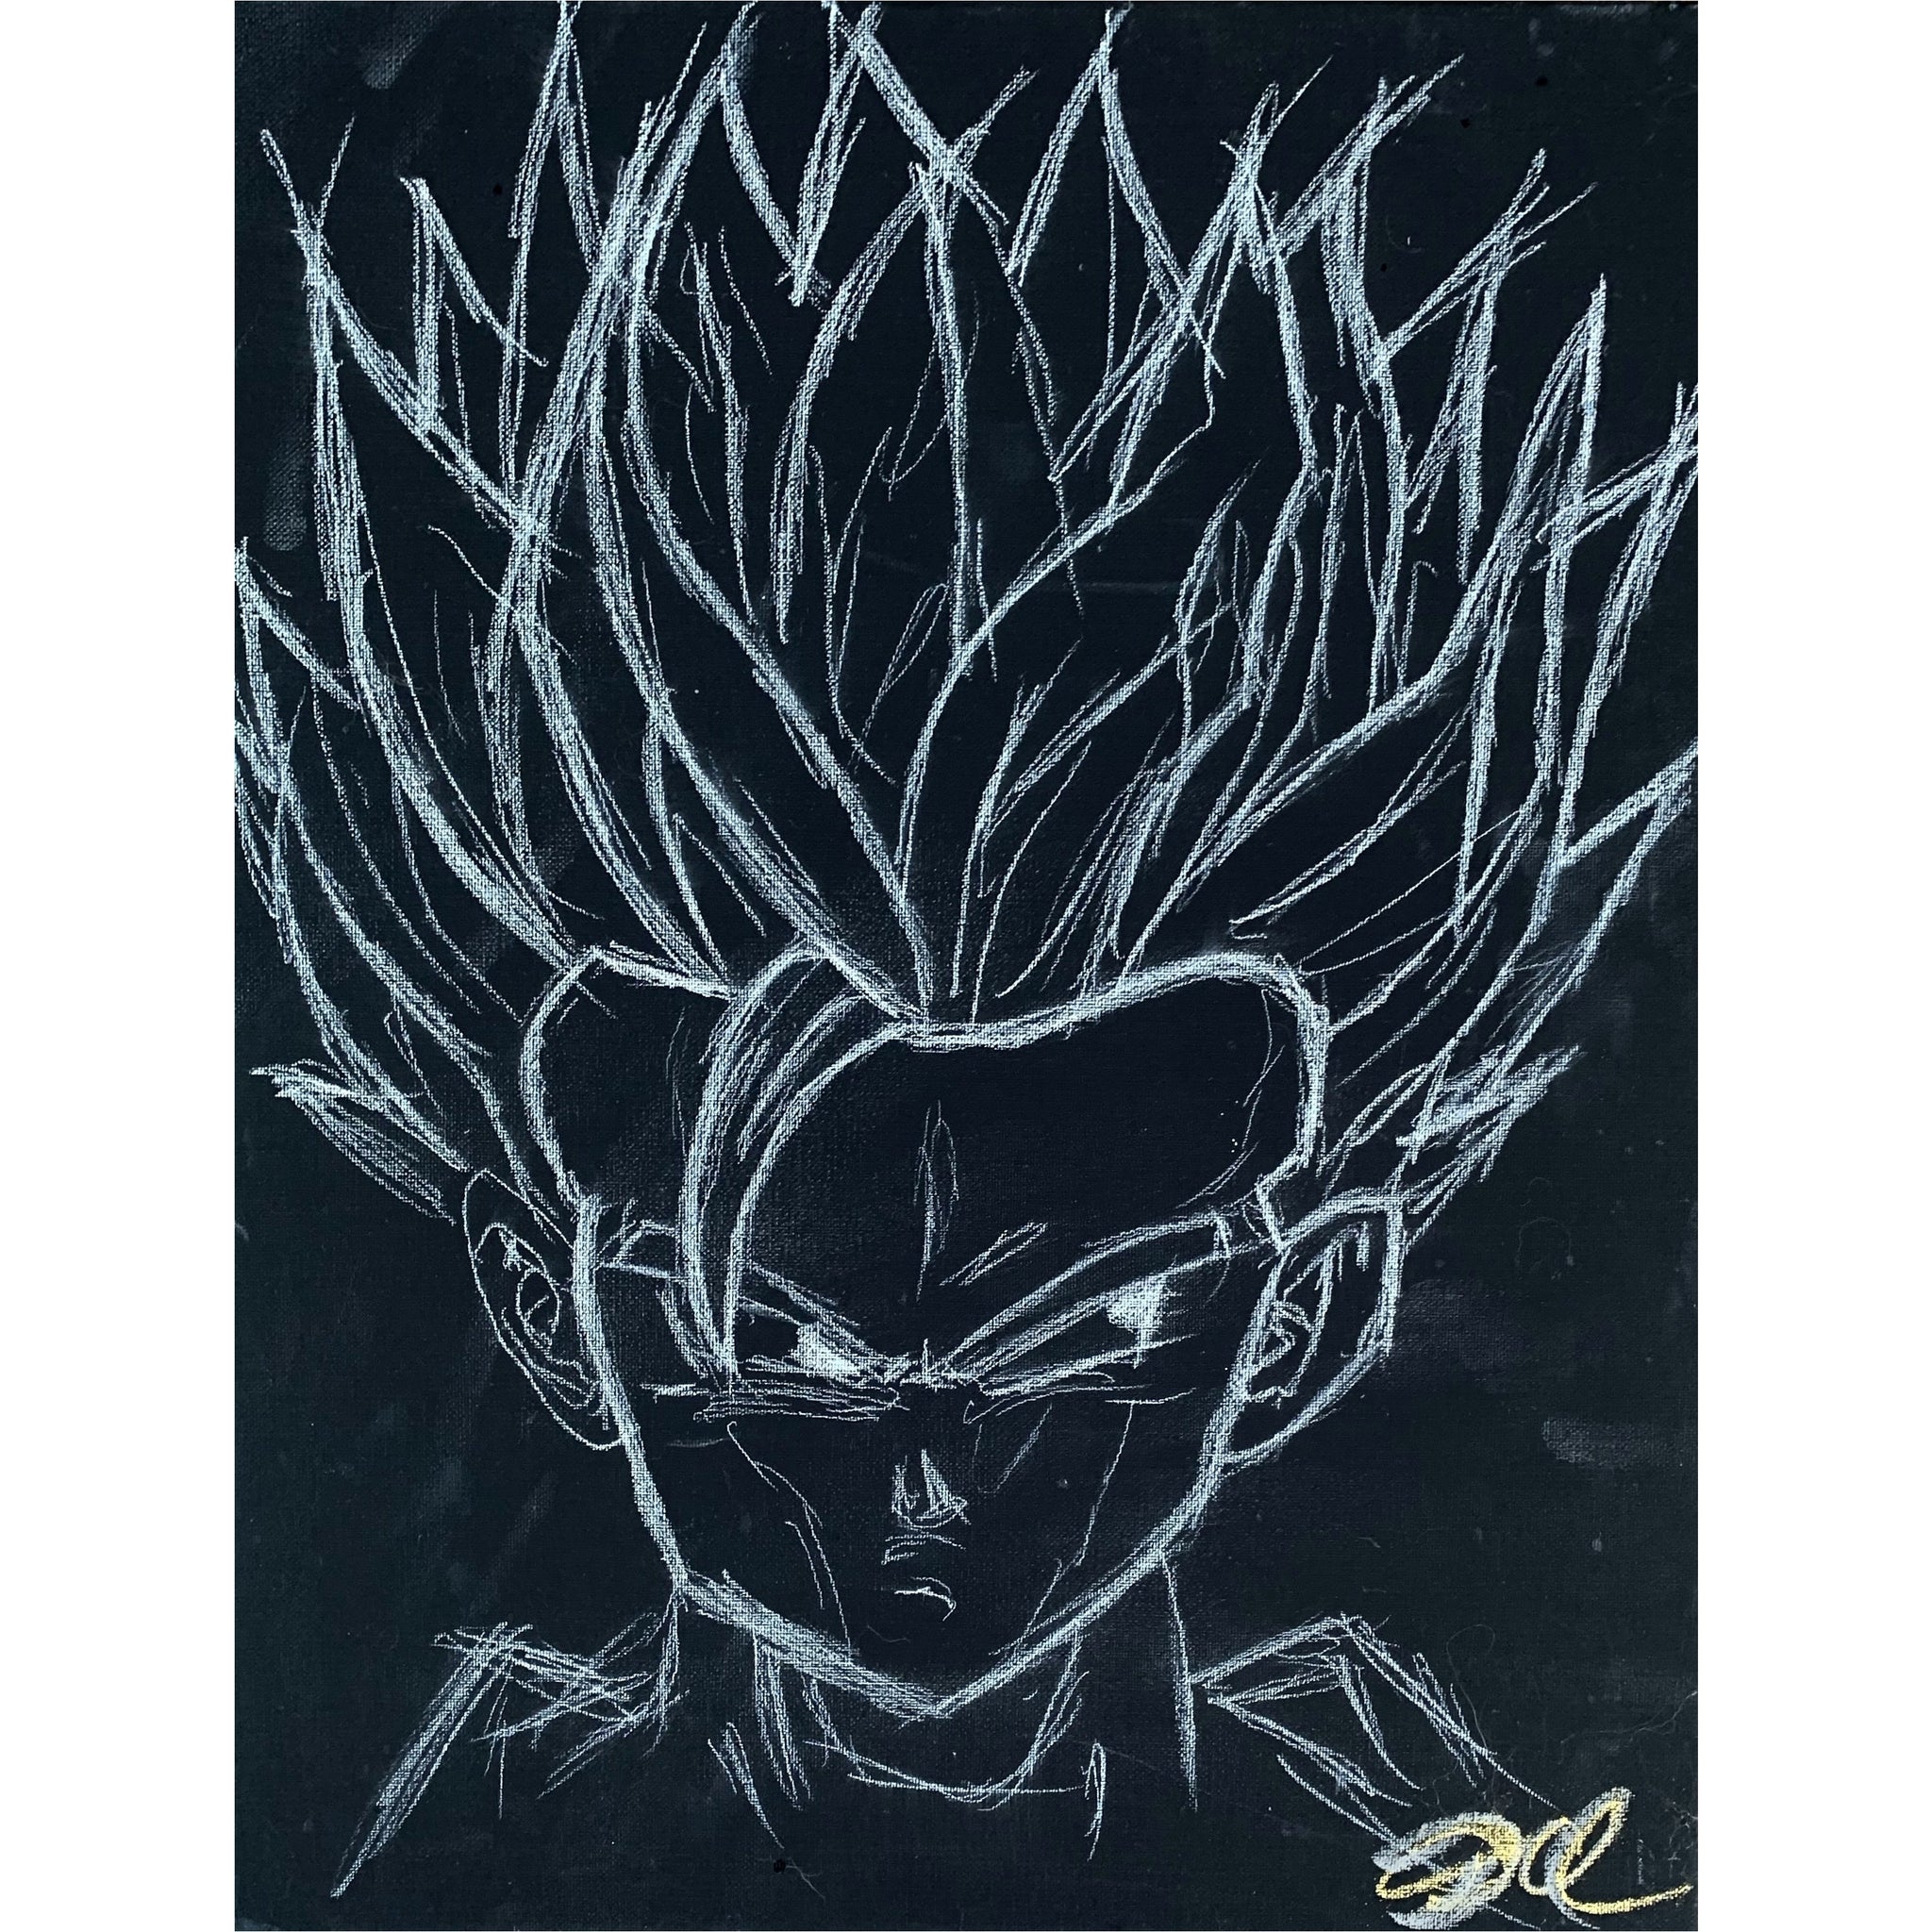 Goku “Super Saiyan #4” – Darnell Clayton Arts